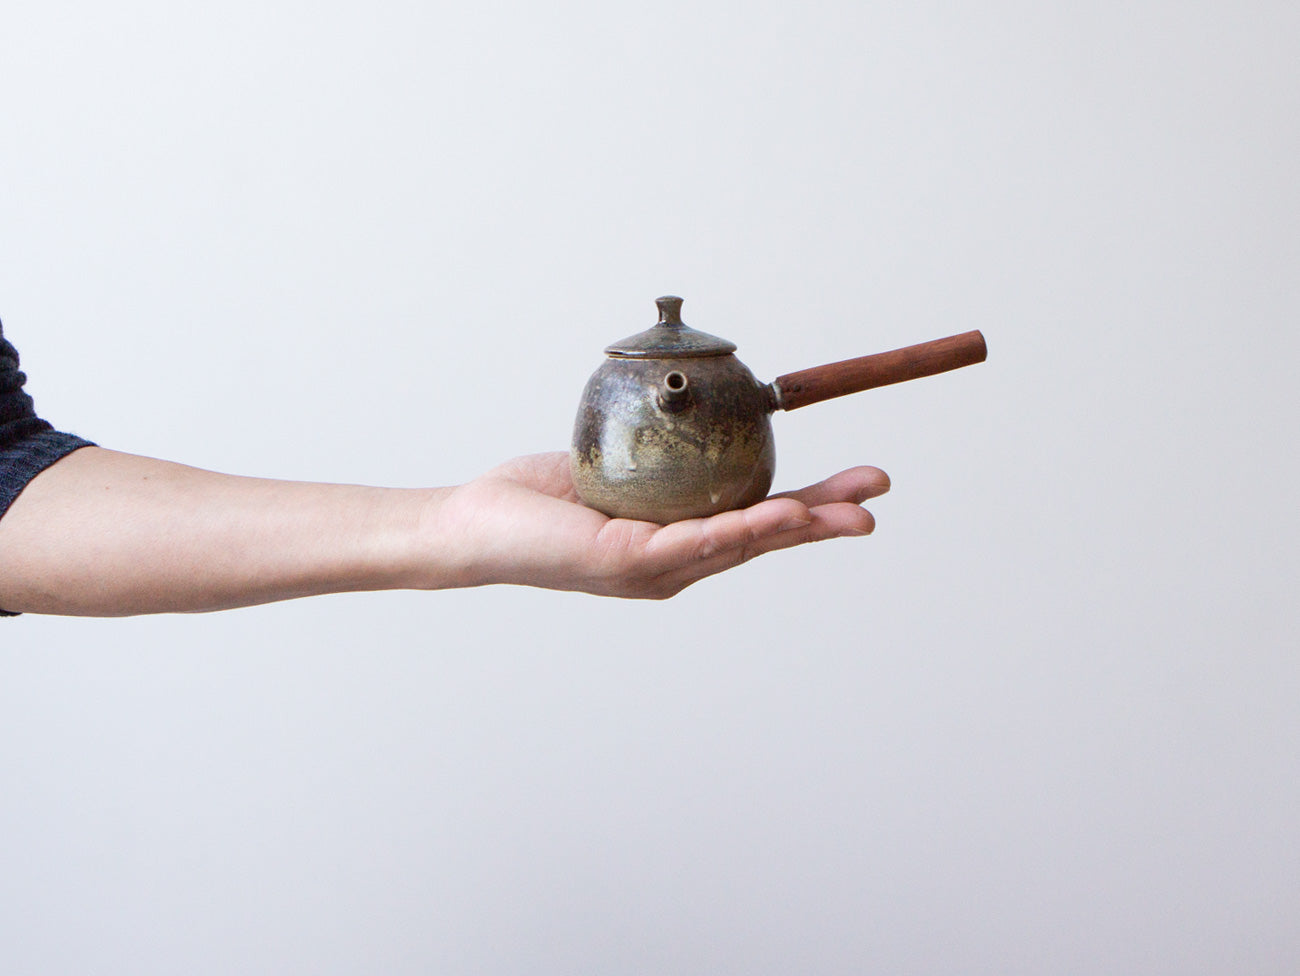 Fire Cypress Teapot, No. 7